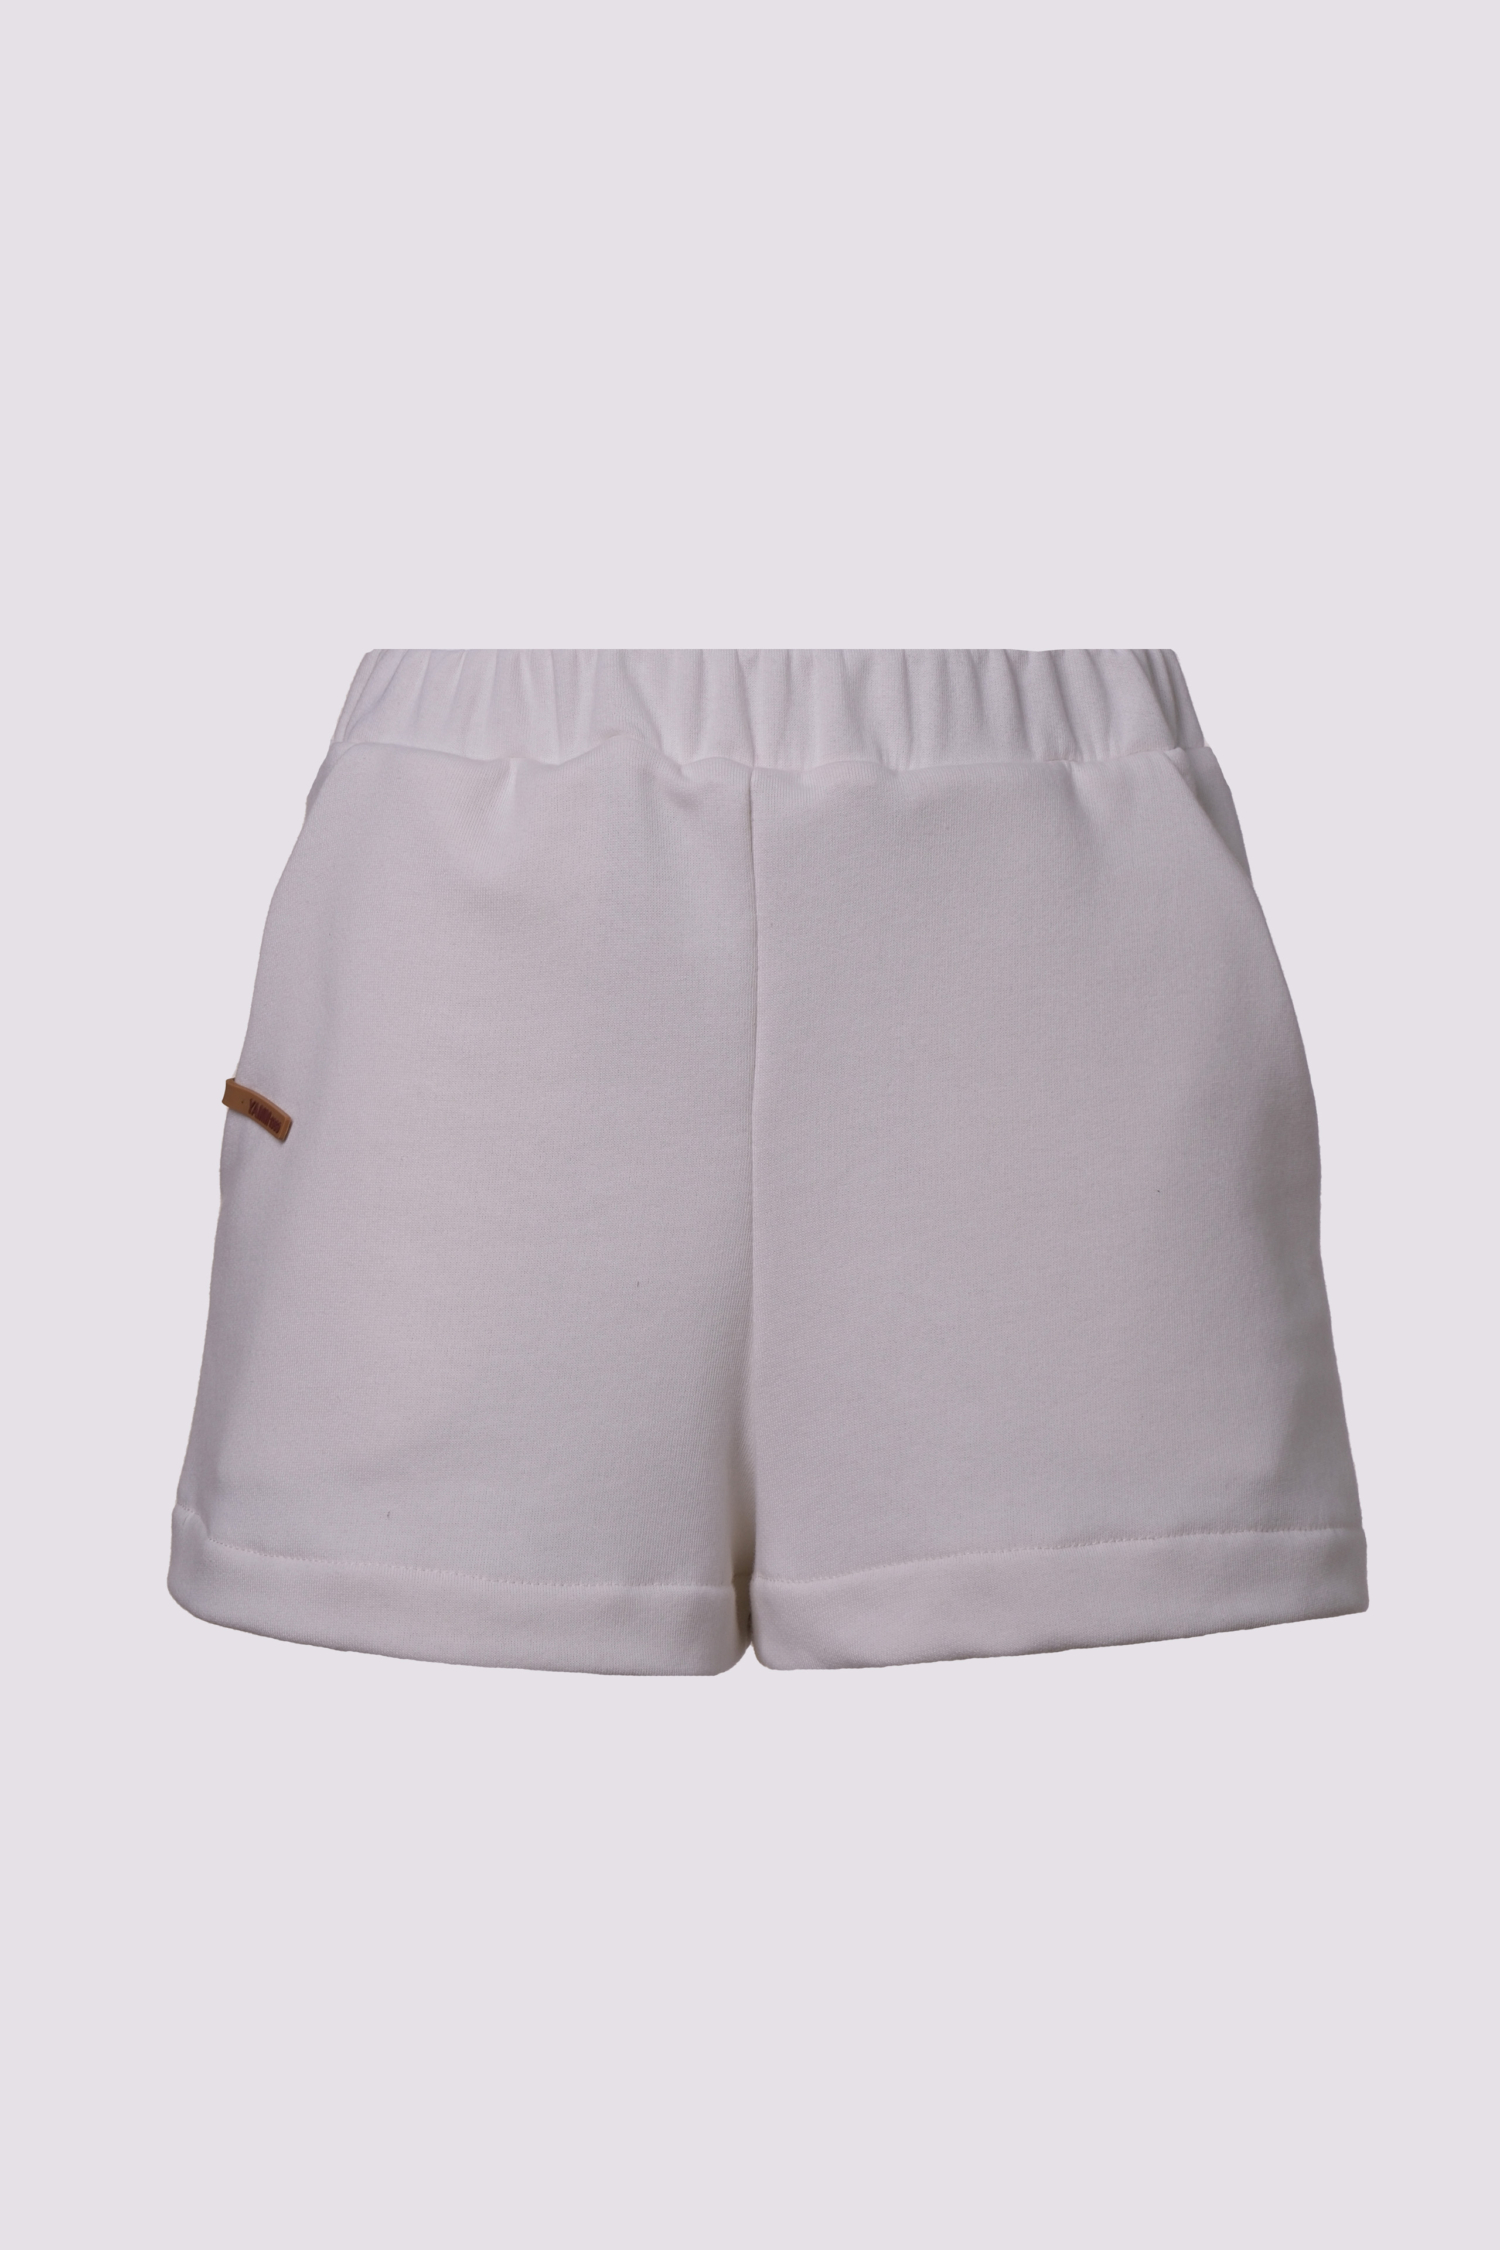 YAMM White Line Shorts